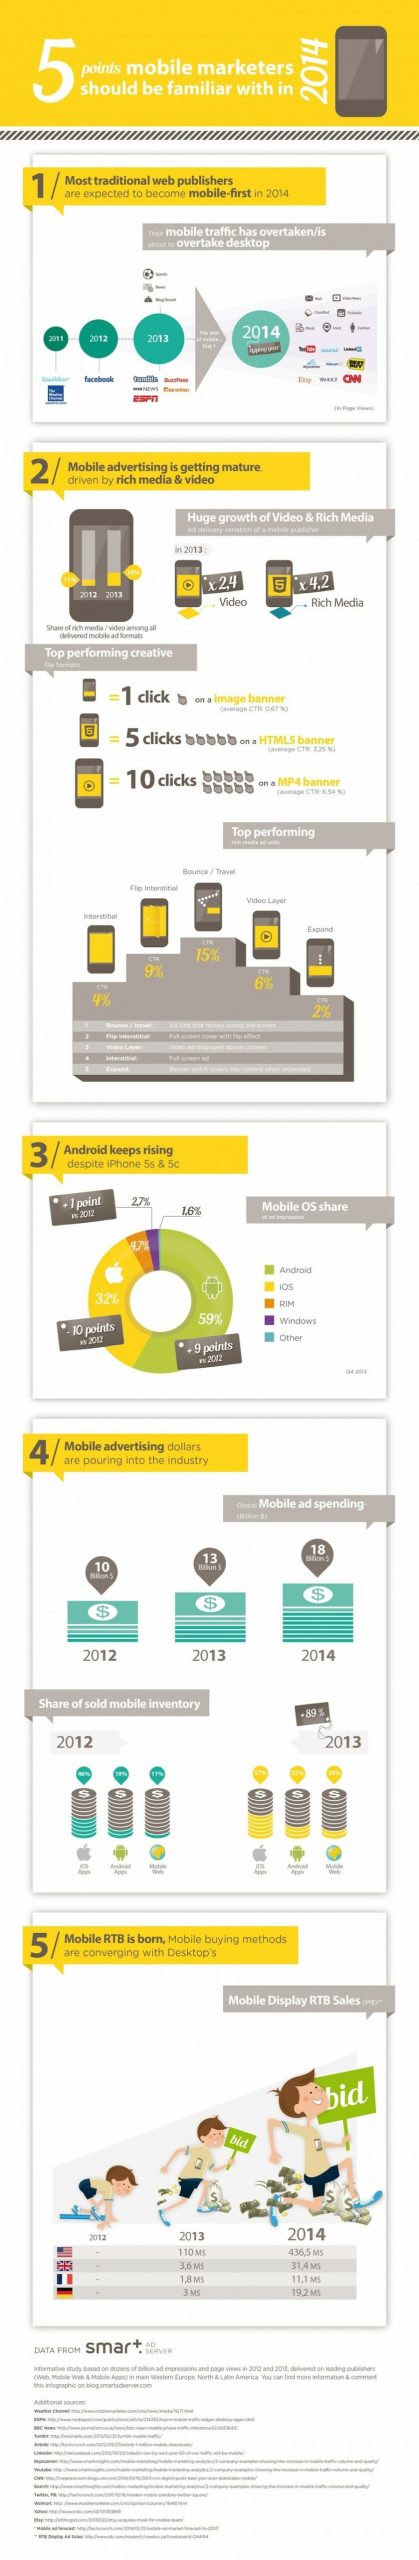 5 tendances marketing mobile 2014 infographie